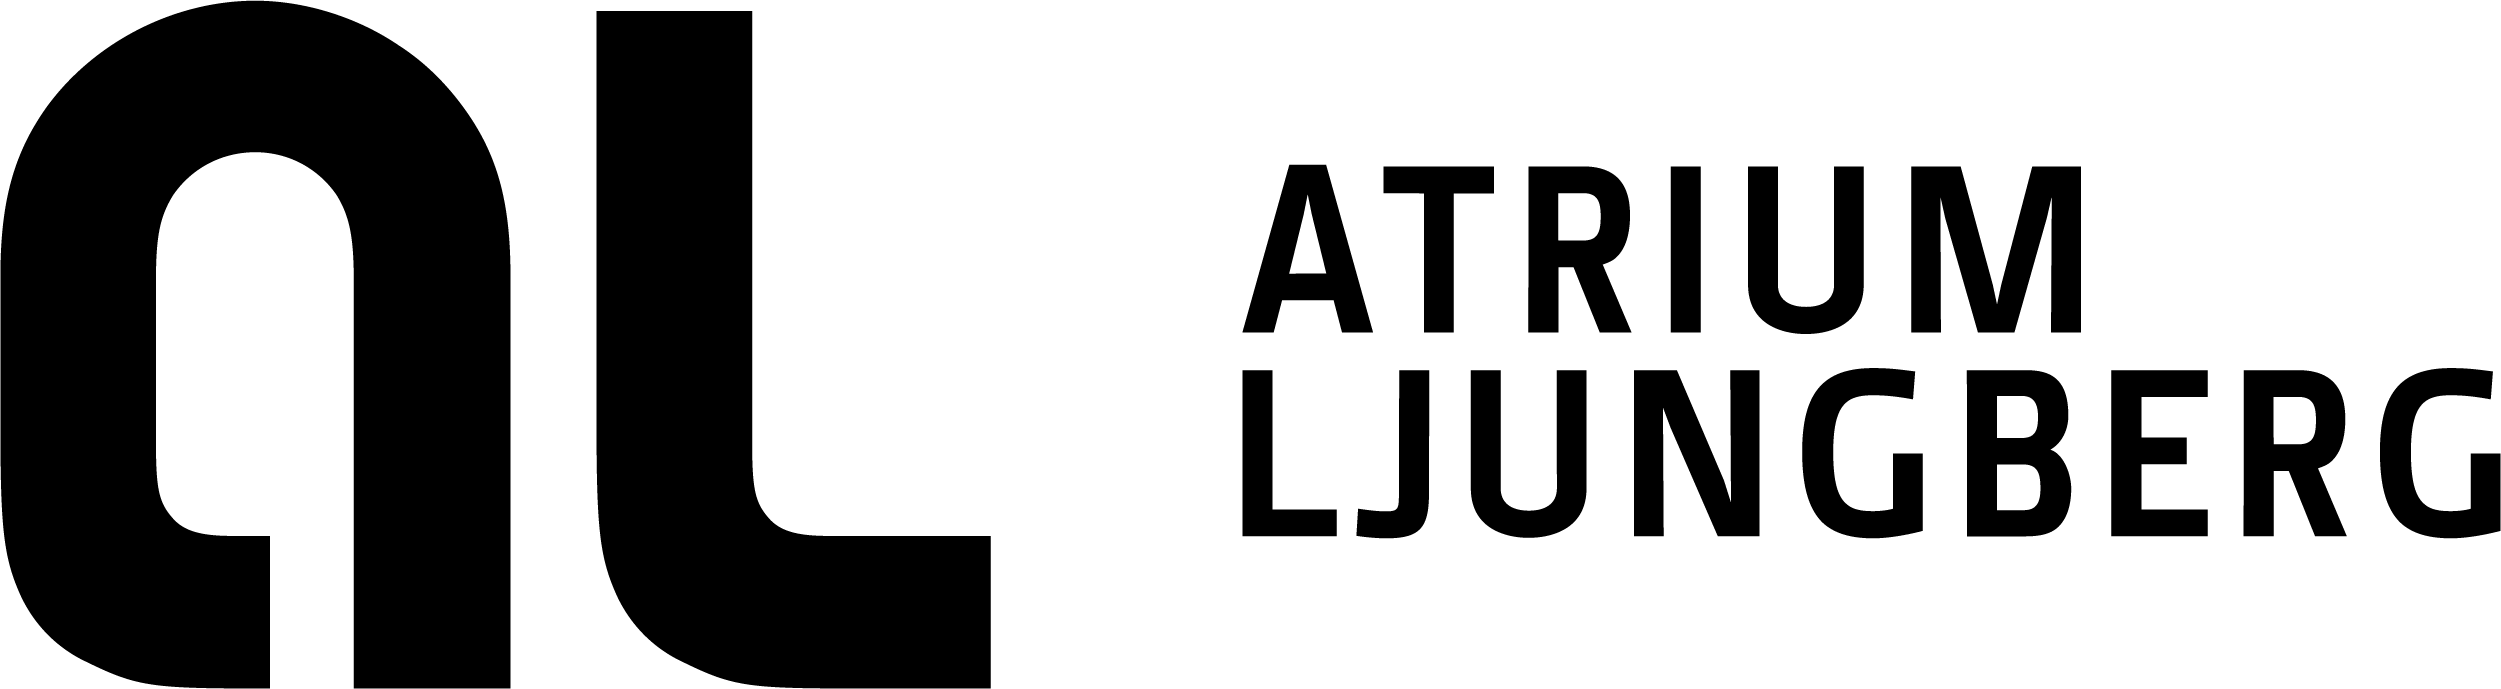 Atrium Ljungberg logotyp i svart